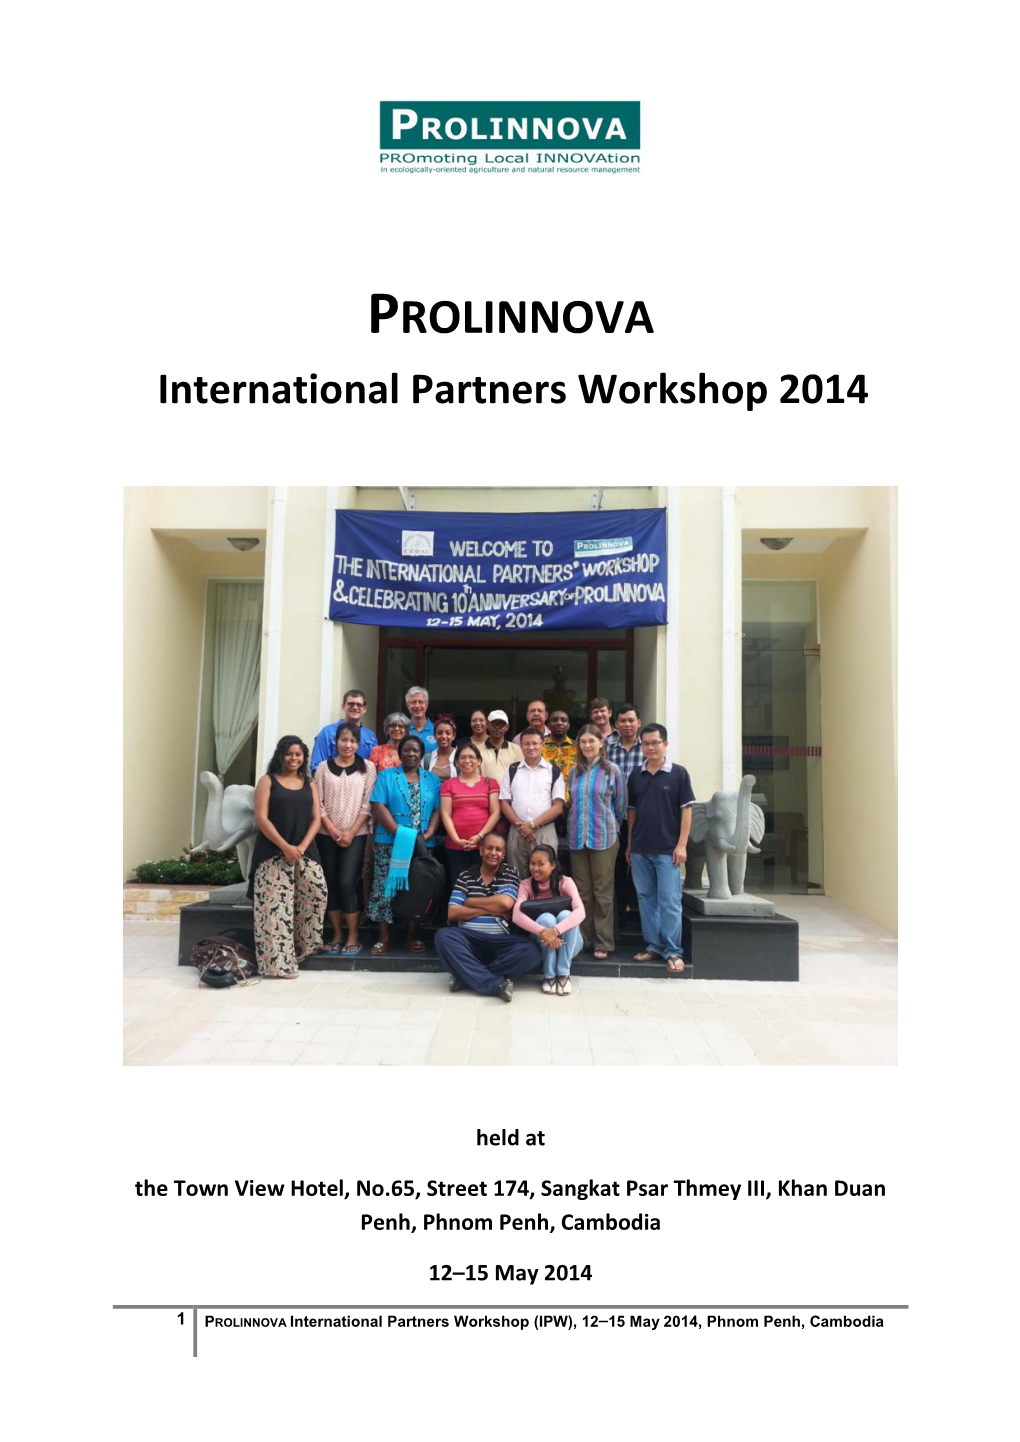 2014 Prolinnova International Partners Workshop Report